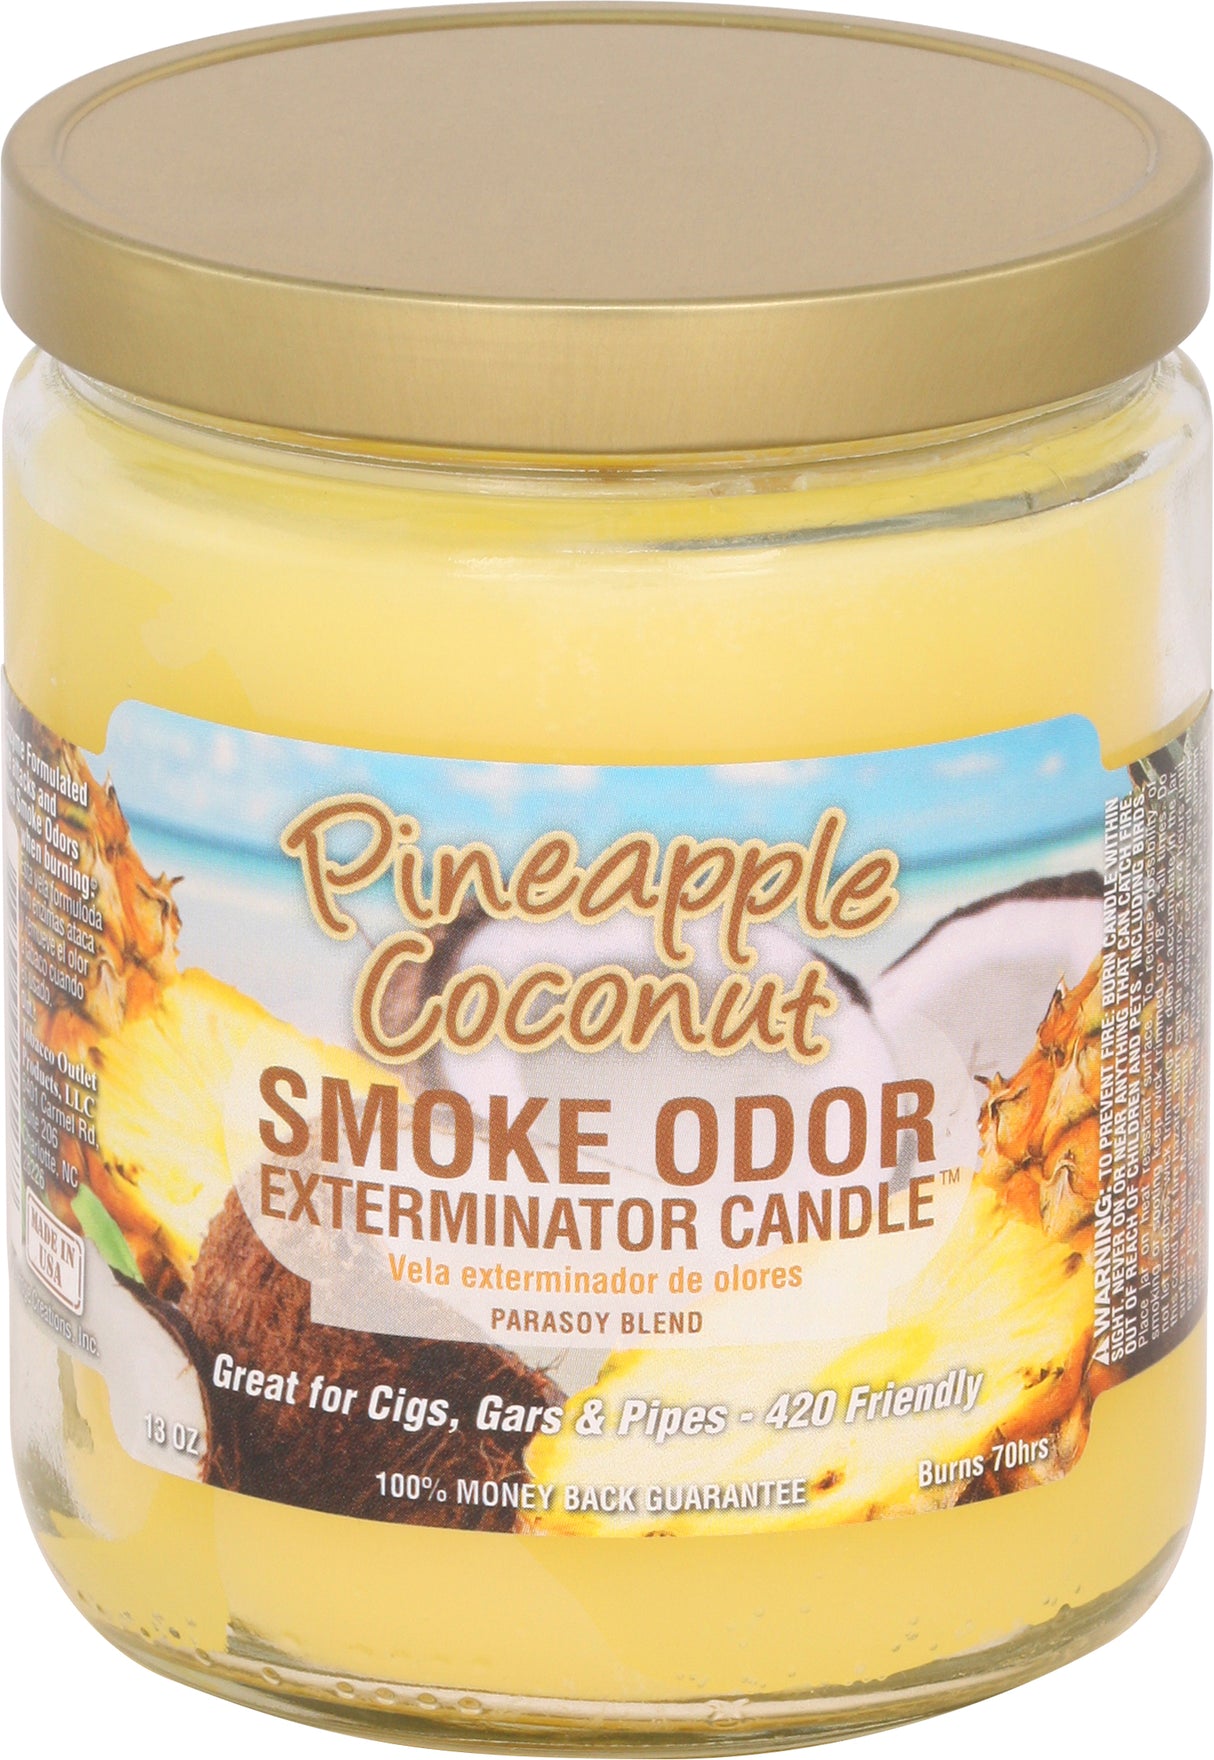 Smoke Odor 13 Oz. Candle: Pineapple Coconut